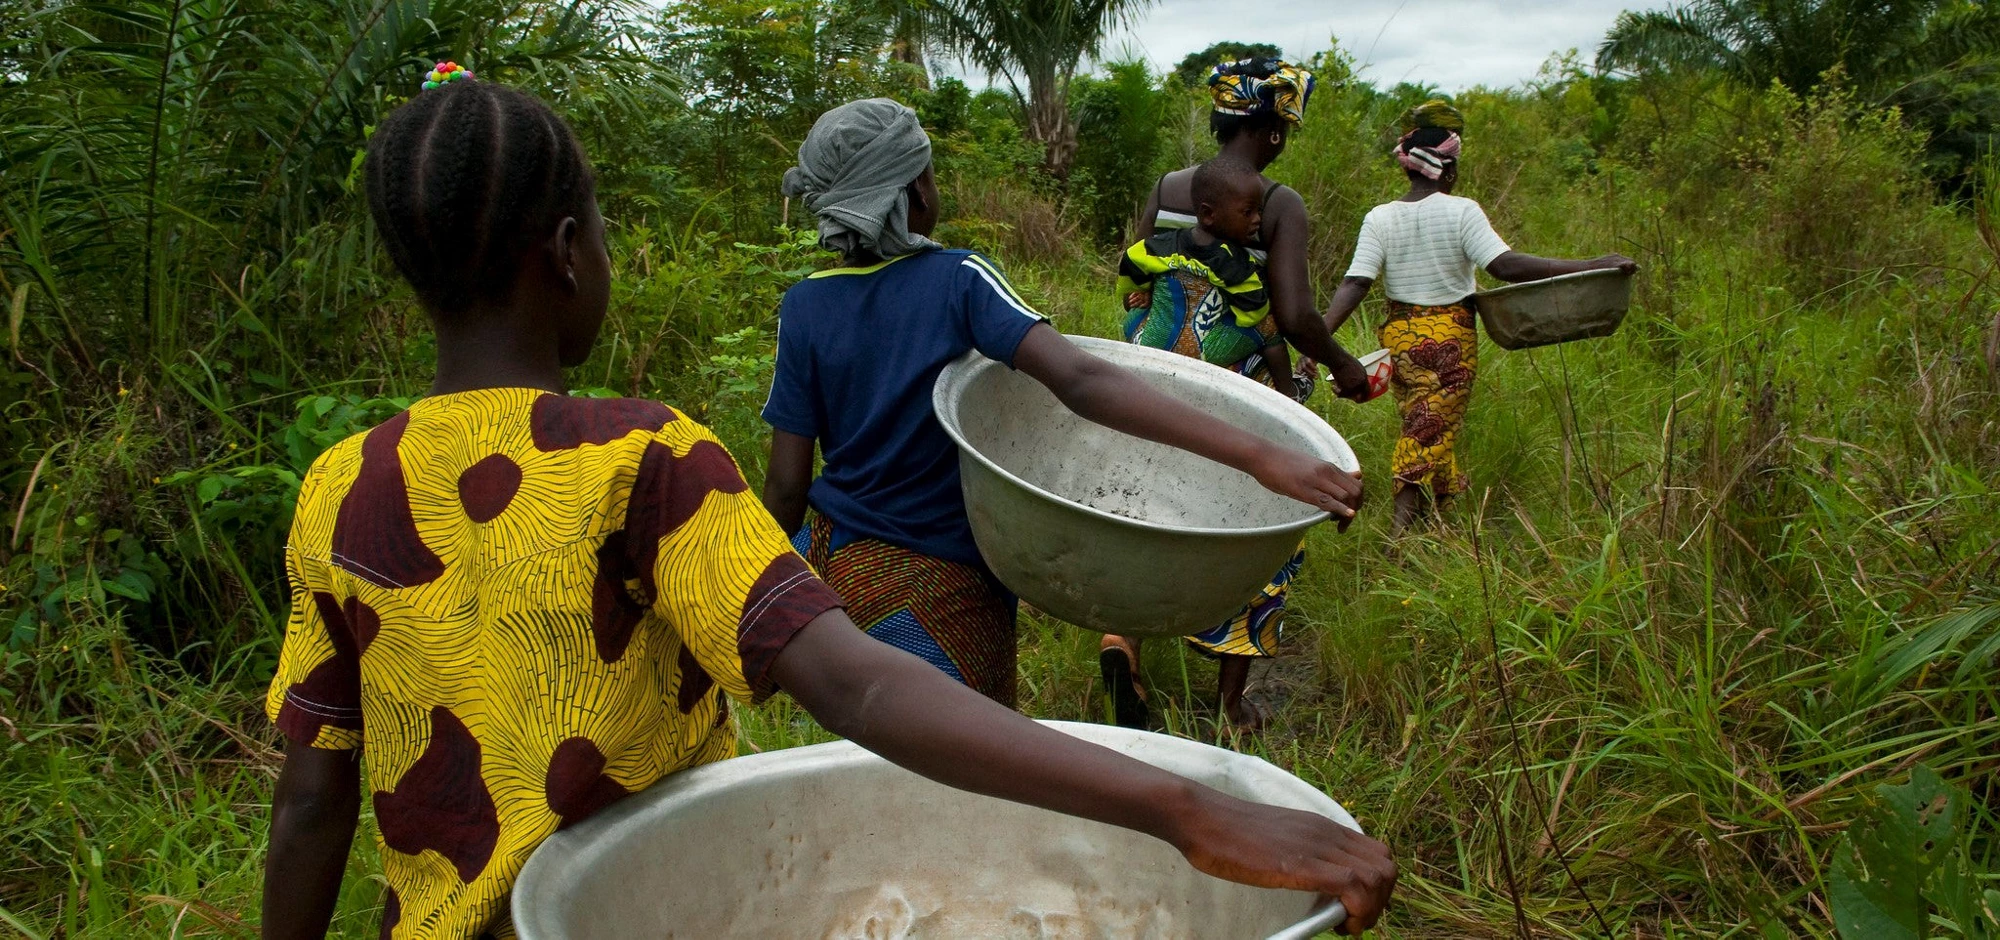 People are getting water in Benin. Photo: Arne Hoel / World Bank